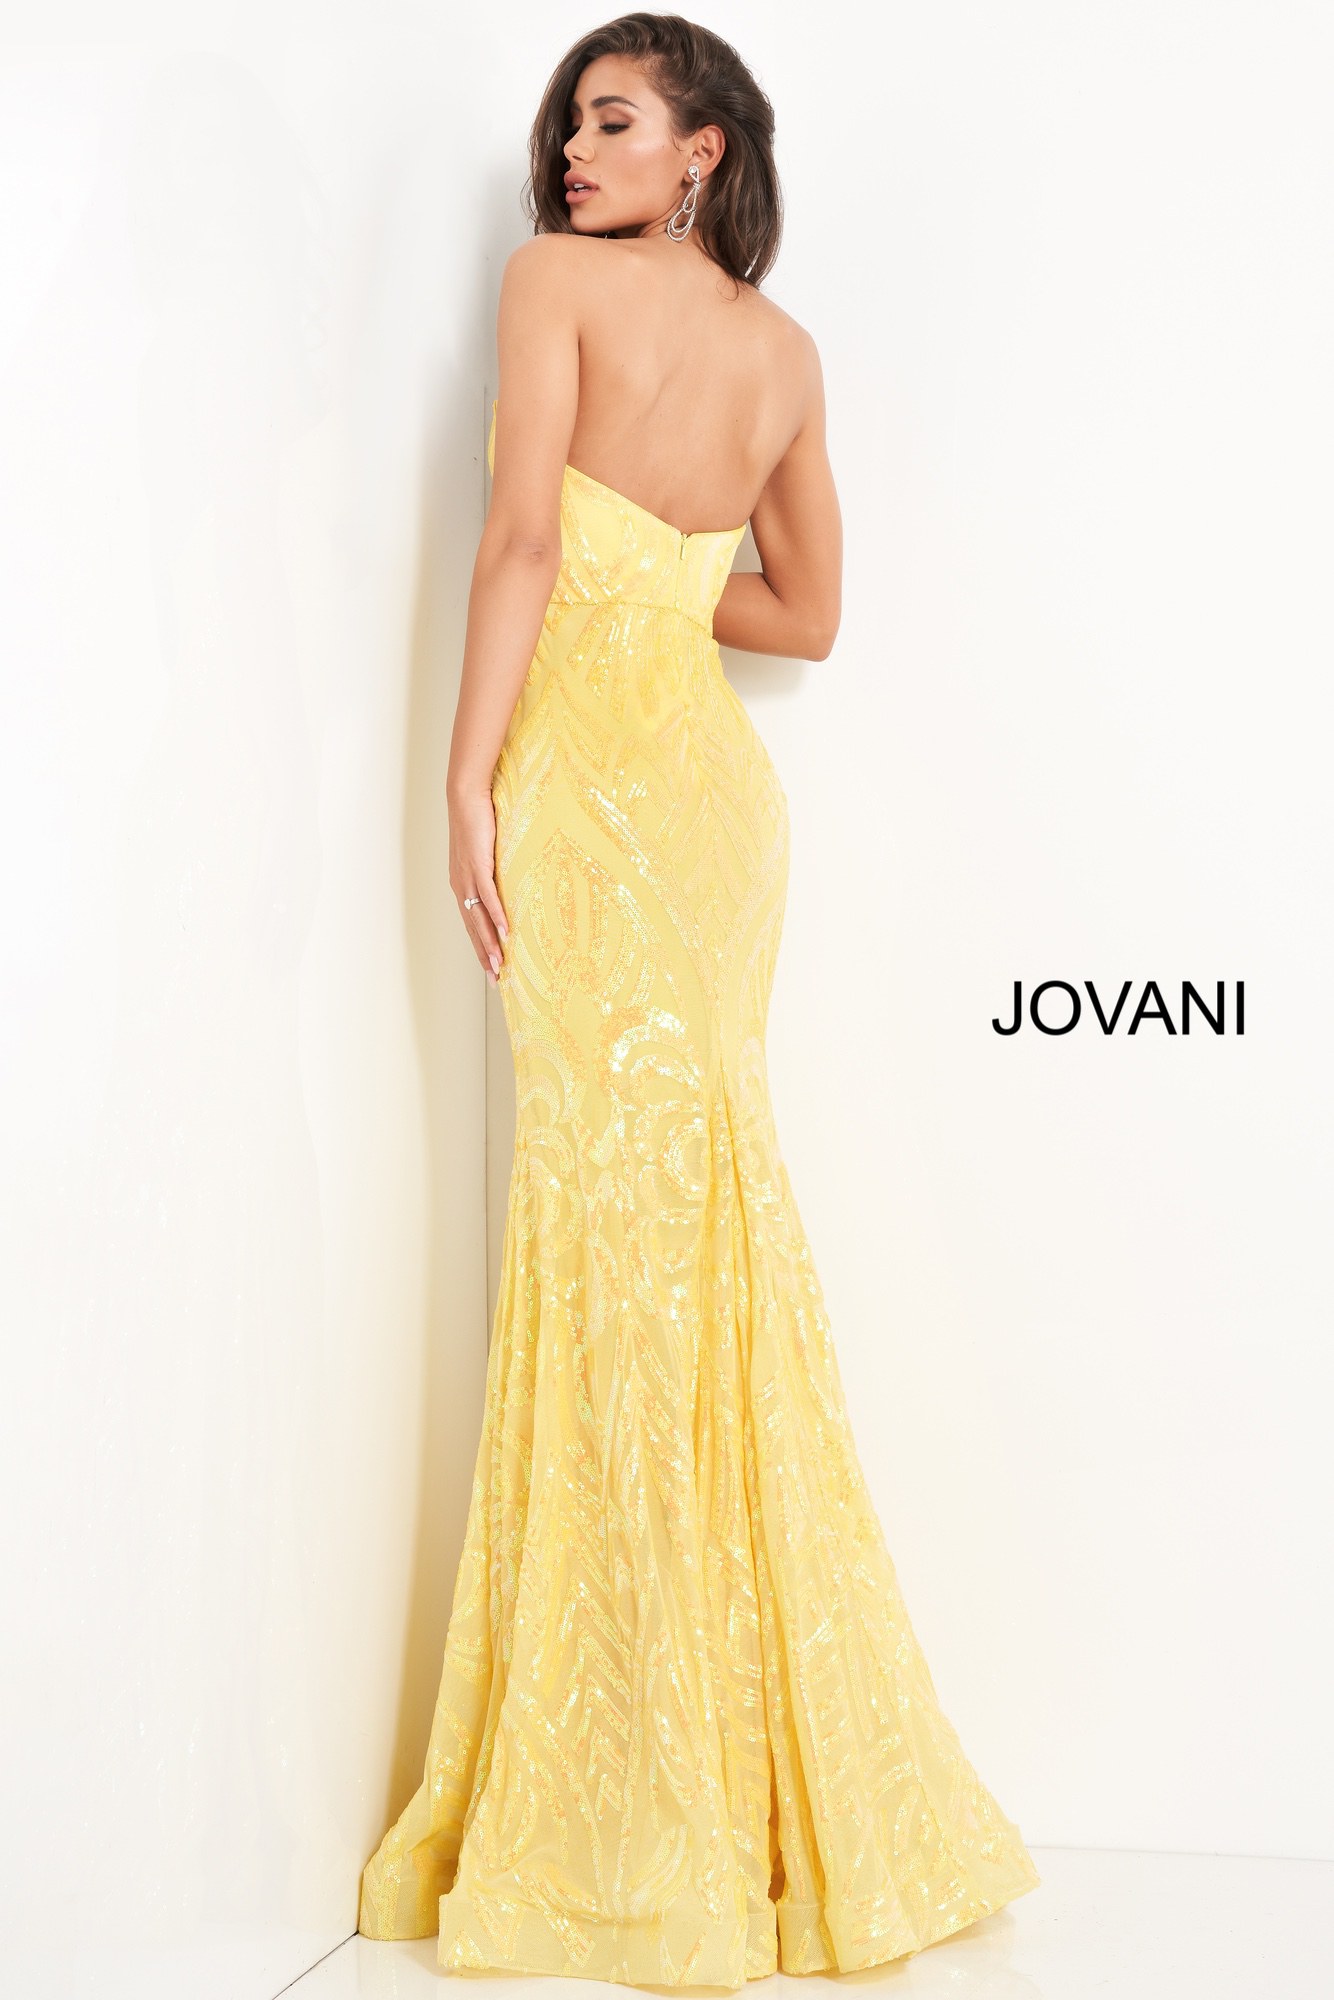 Jovani 03445 | Yellow Plunging Neckline Sheath Prom Dress